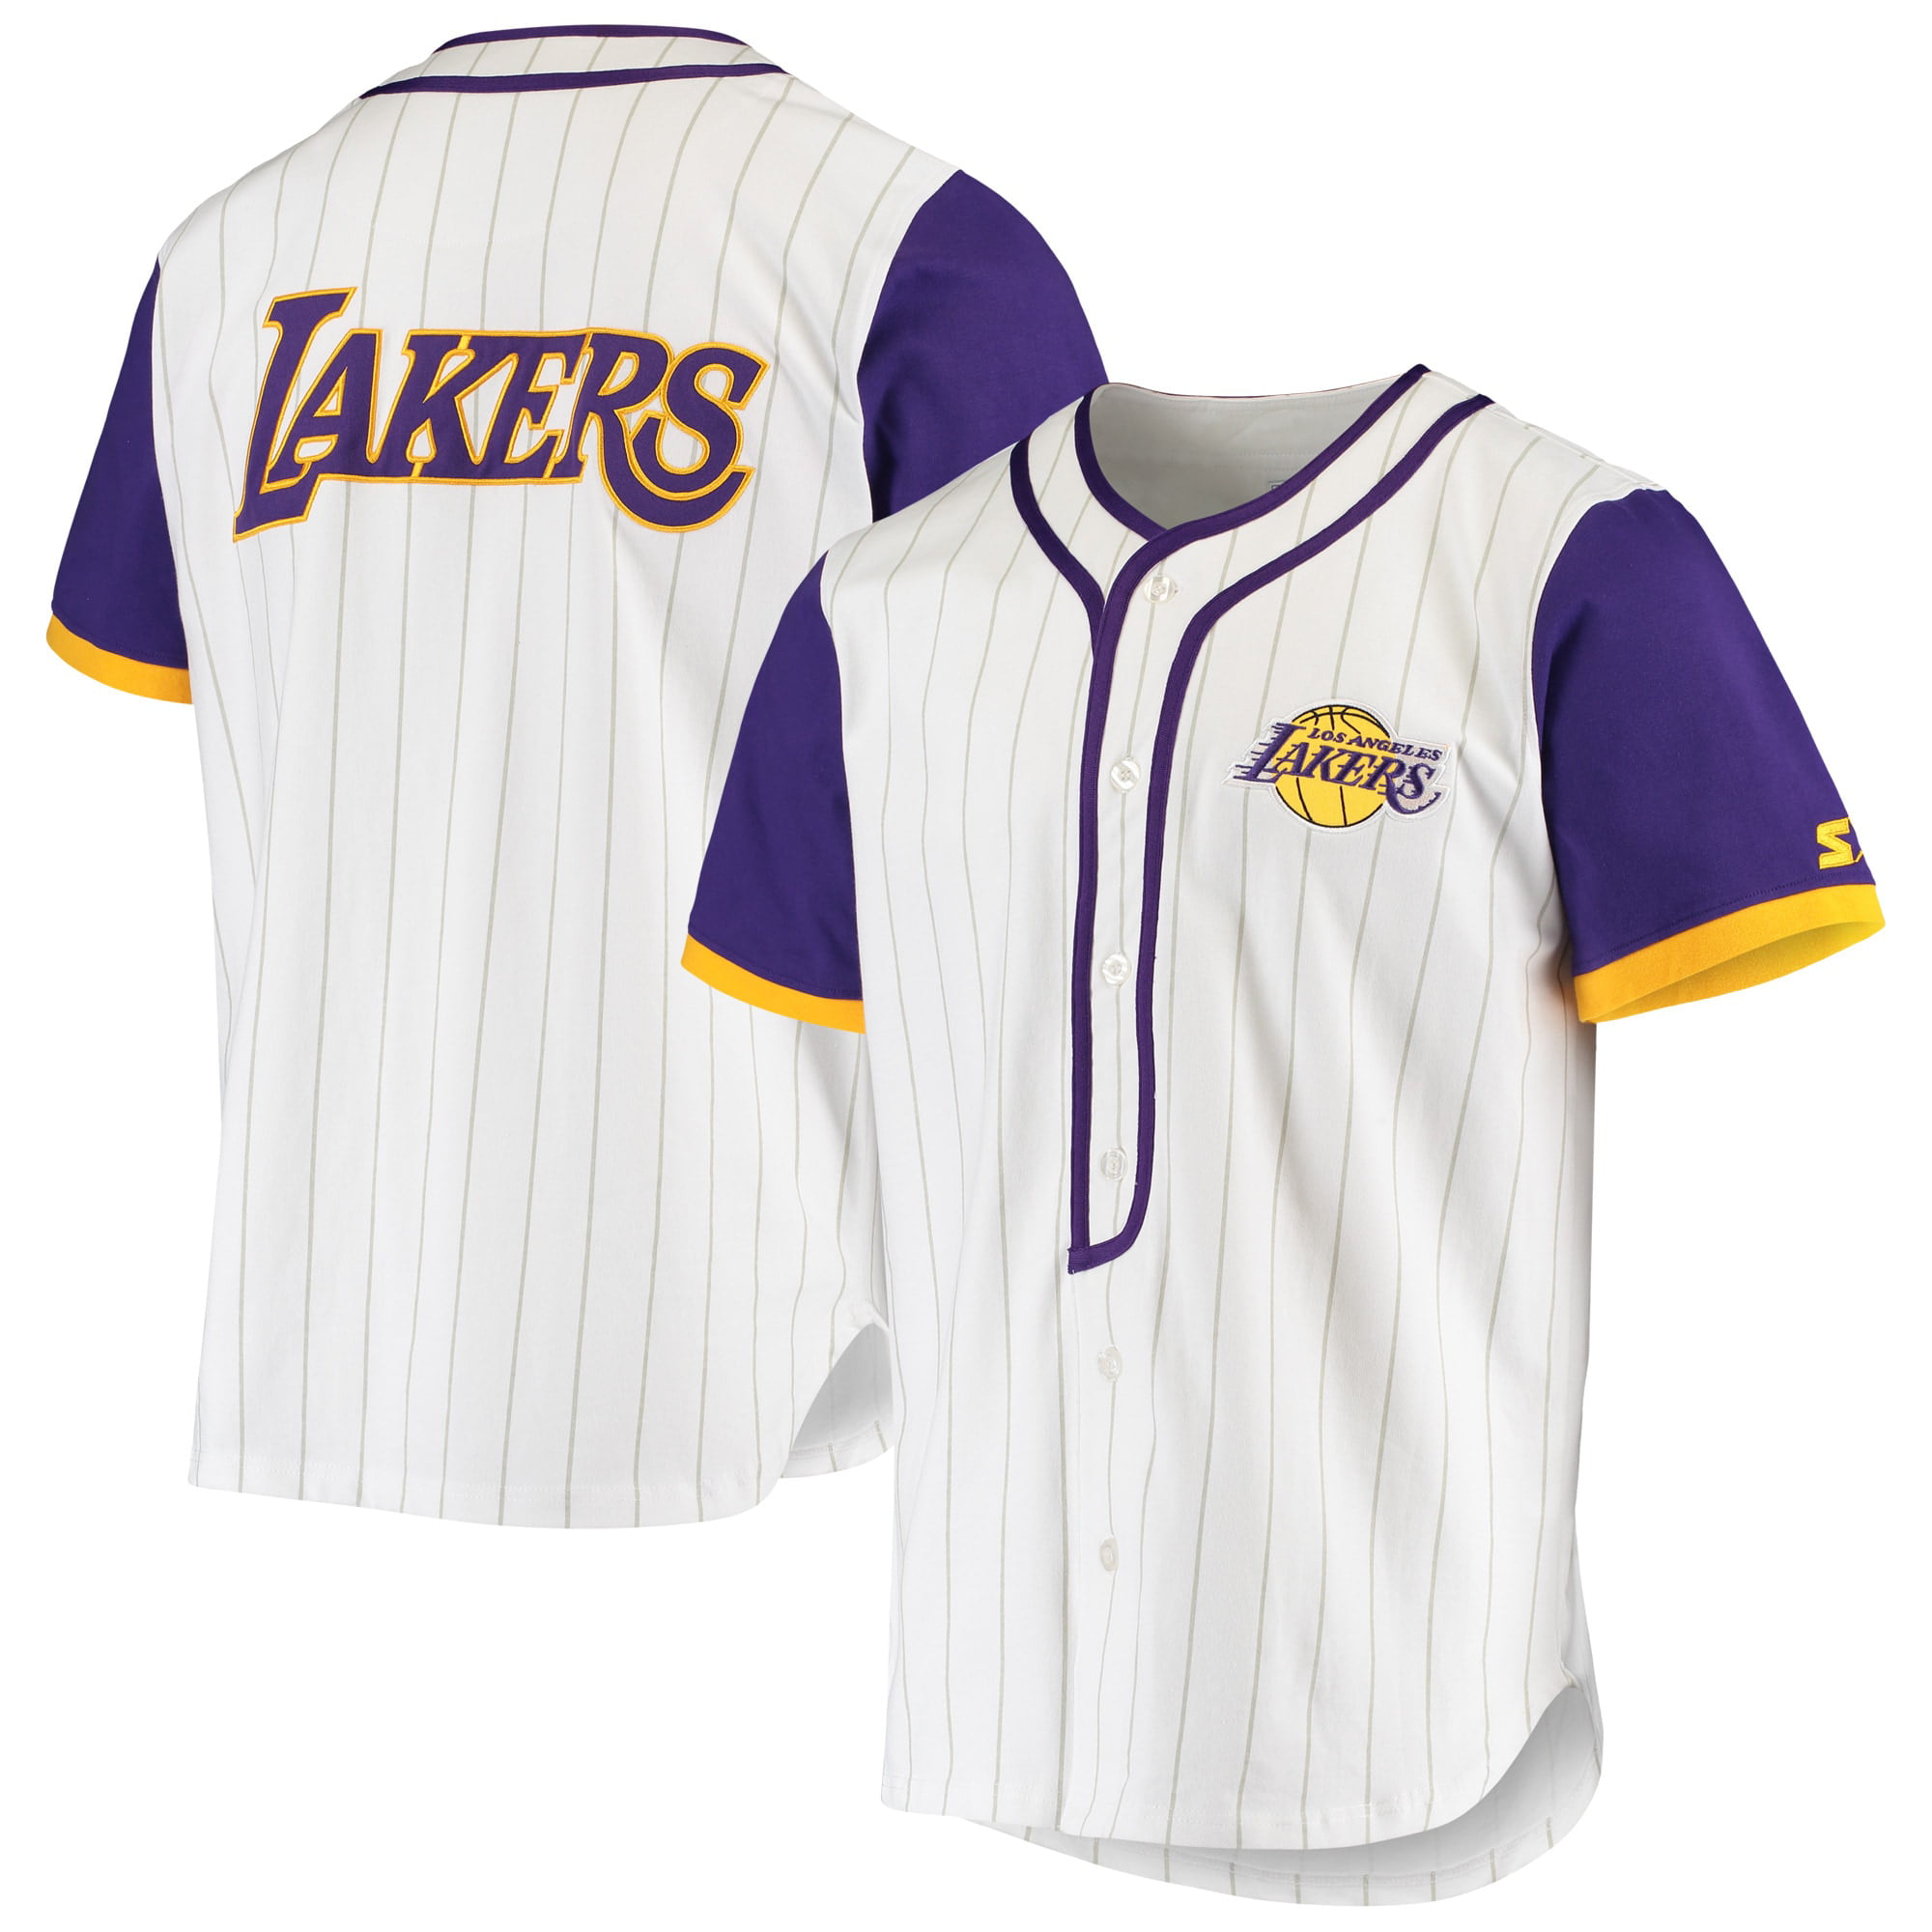 Los Angeles Lakers Starter Scout Baseball Fashion Jersey - White